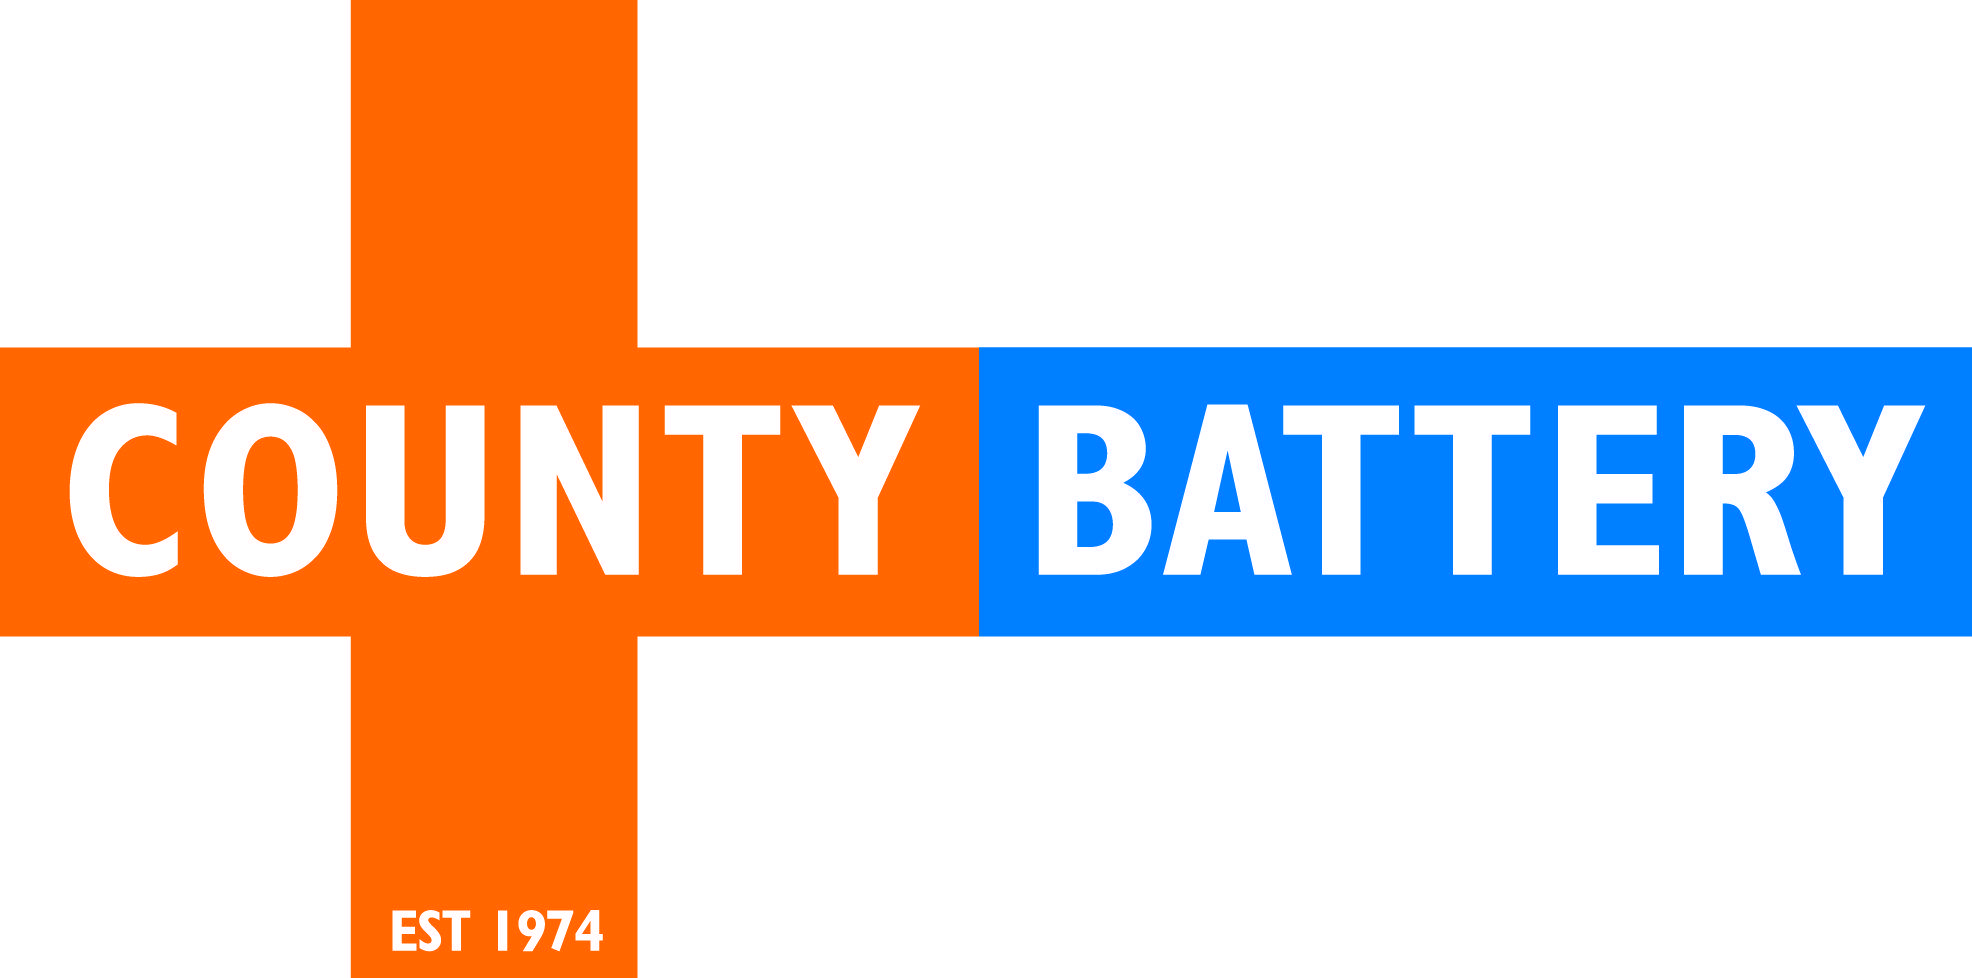 Green Battery Logo - County Battery Logo cmyk - Green Element